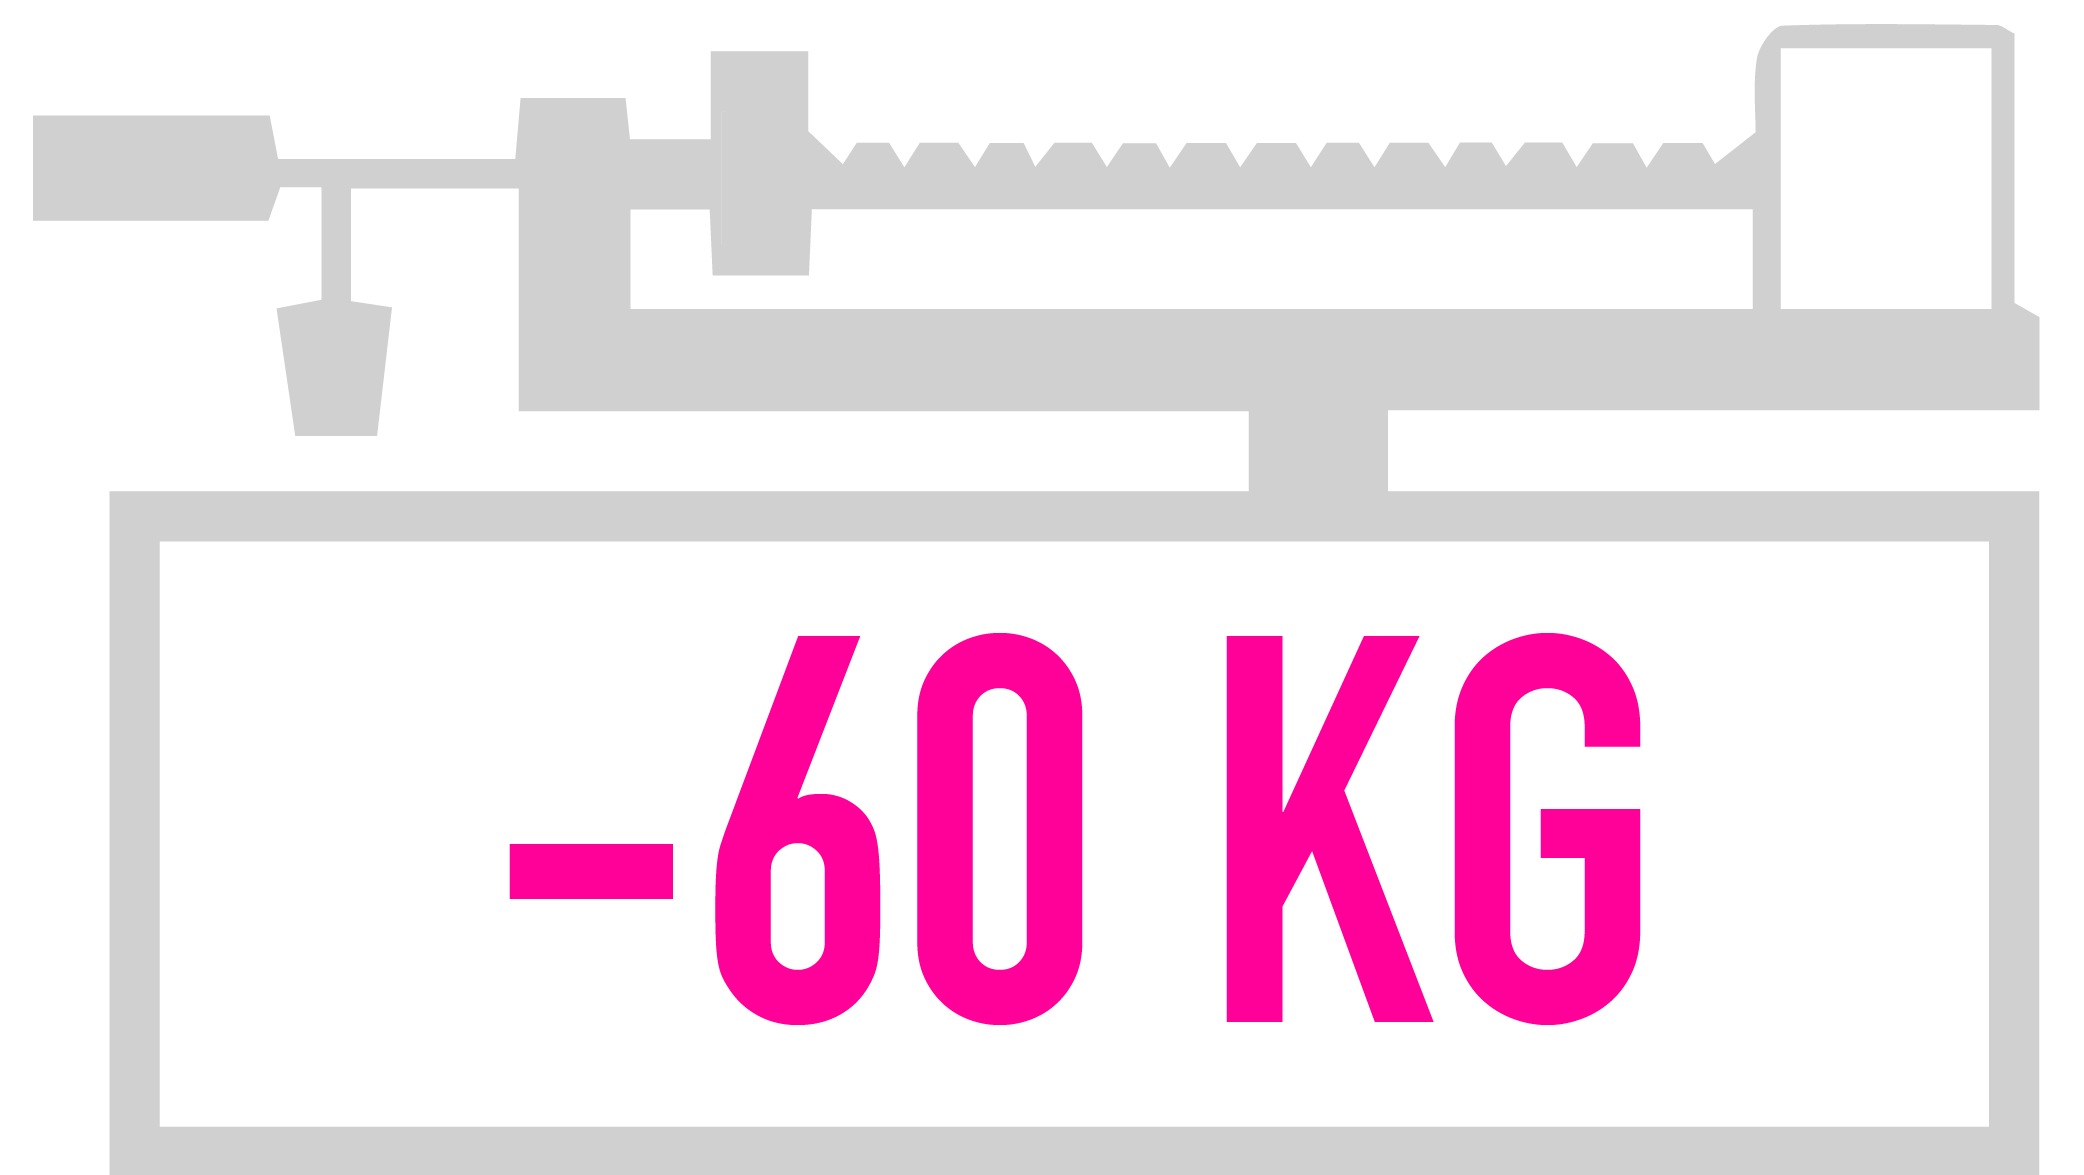  60kg 01